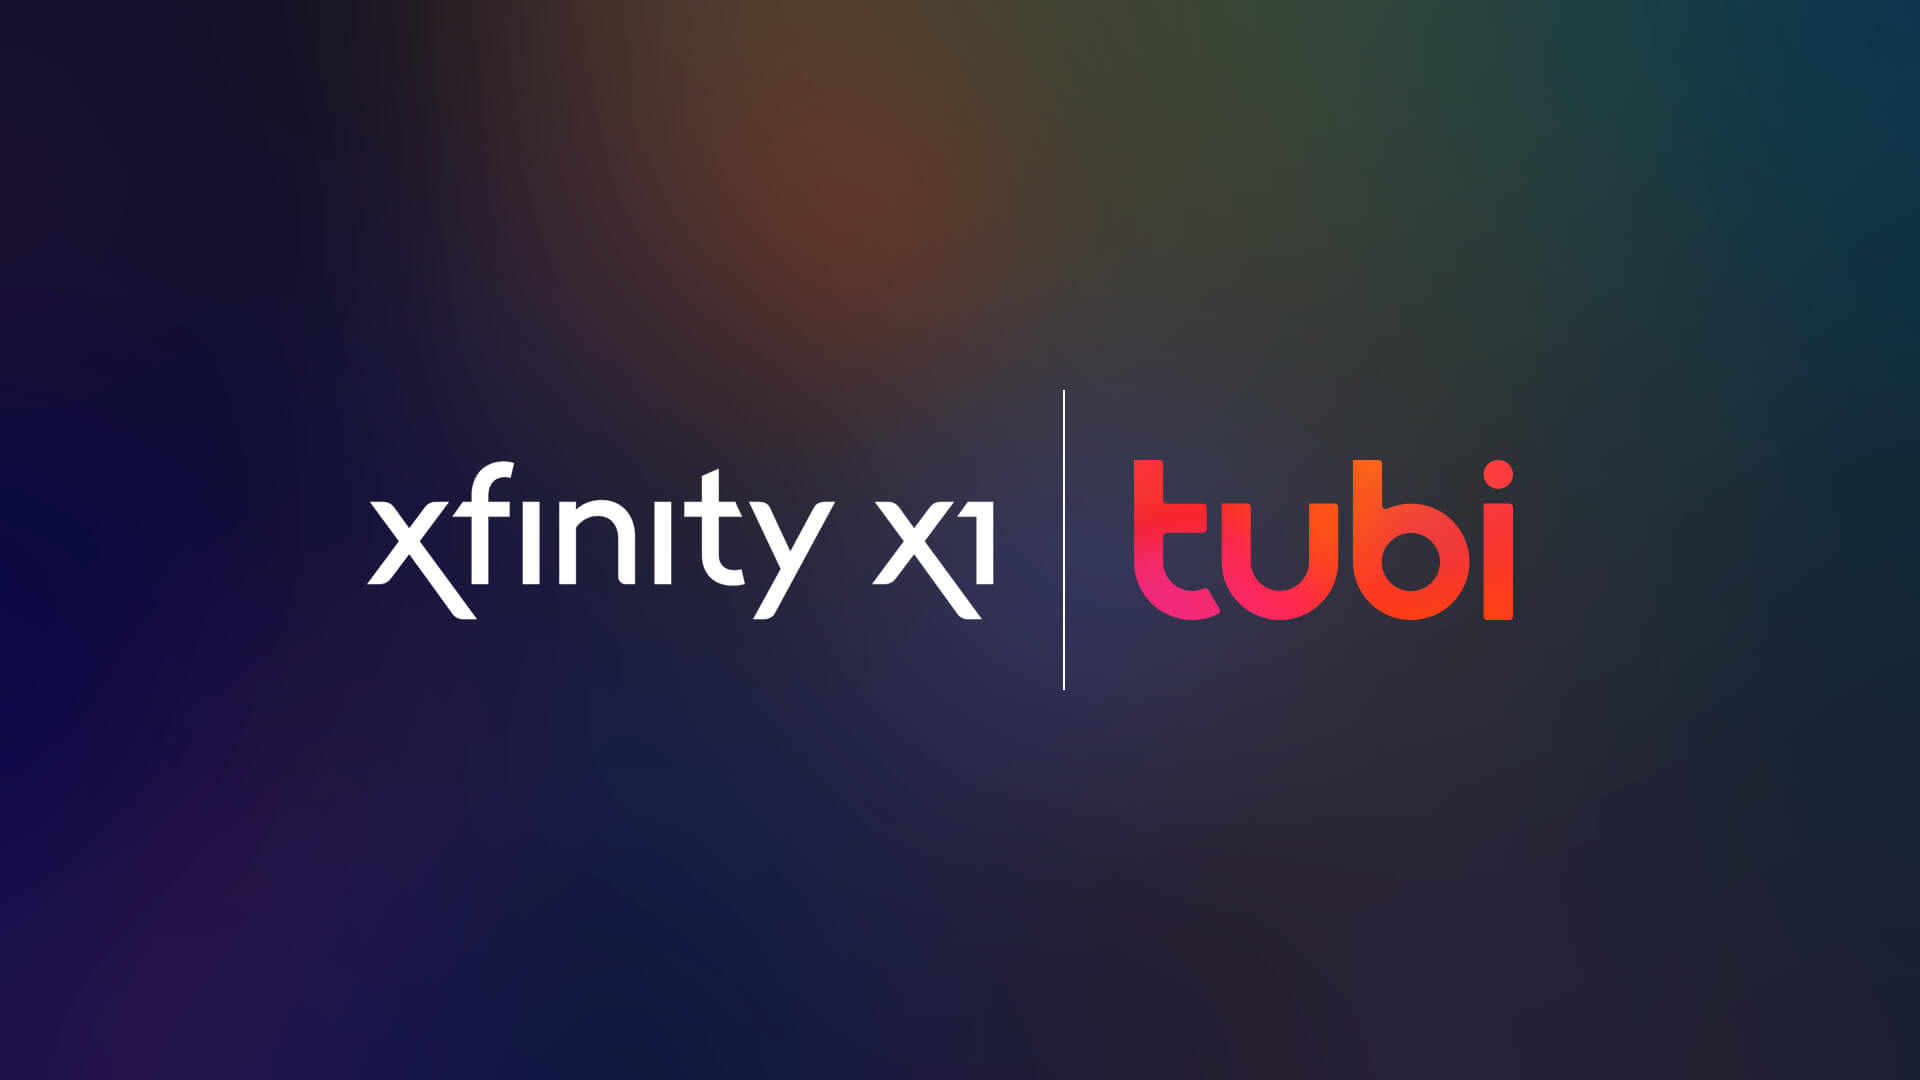 Tubi TV on Xfinity